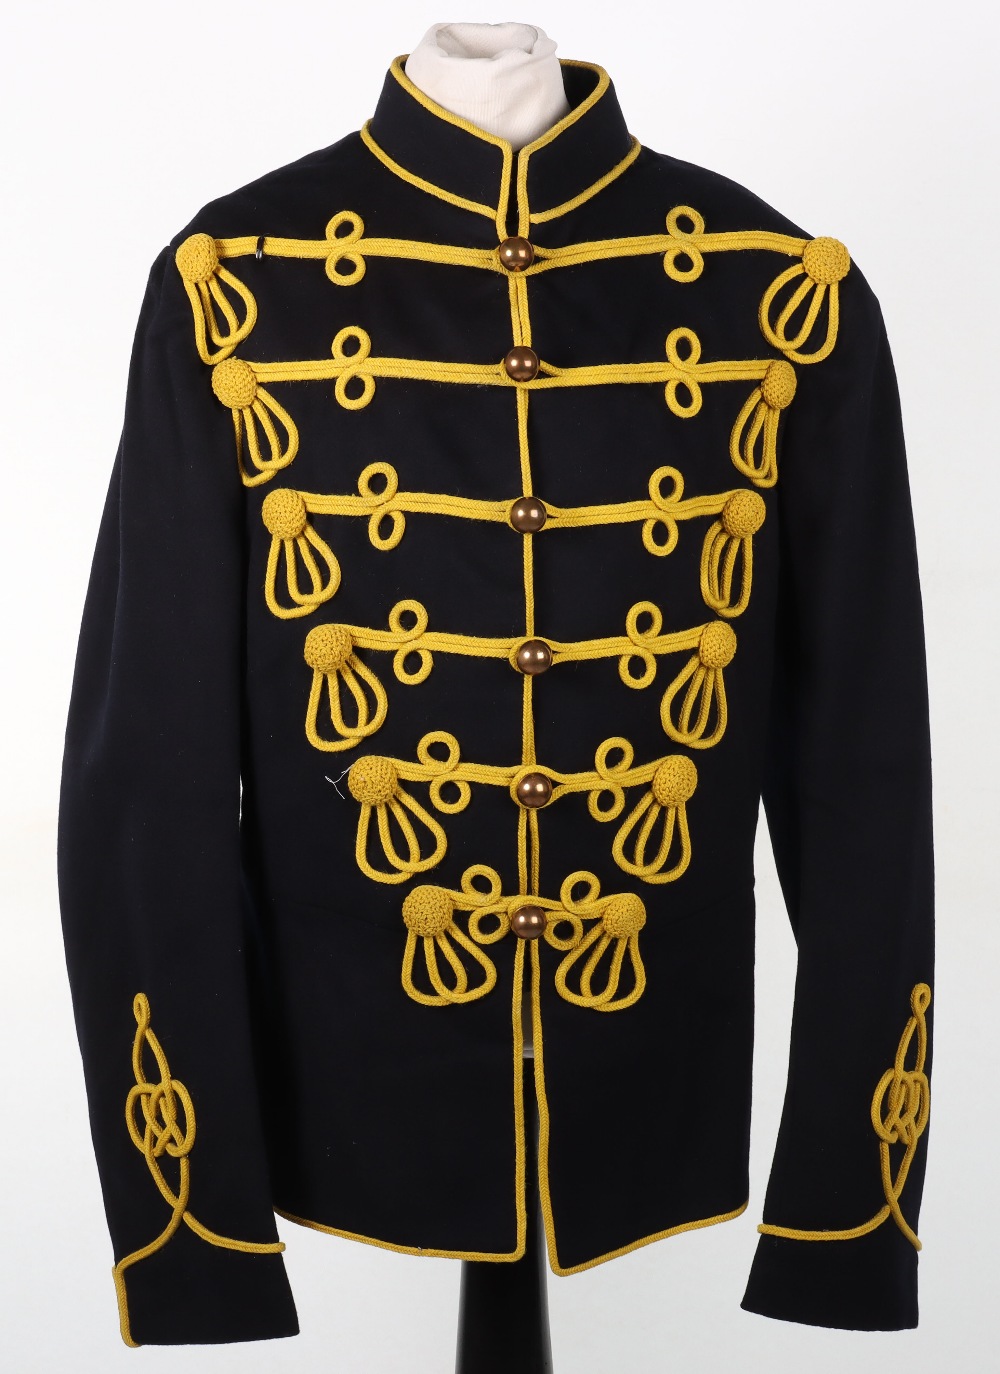 Pre-WW1 British 11th Hussars Other Ranks Dress Uniform - Image 2 of 15